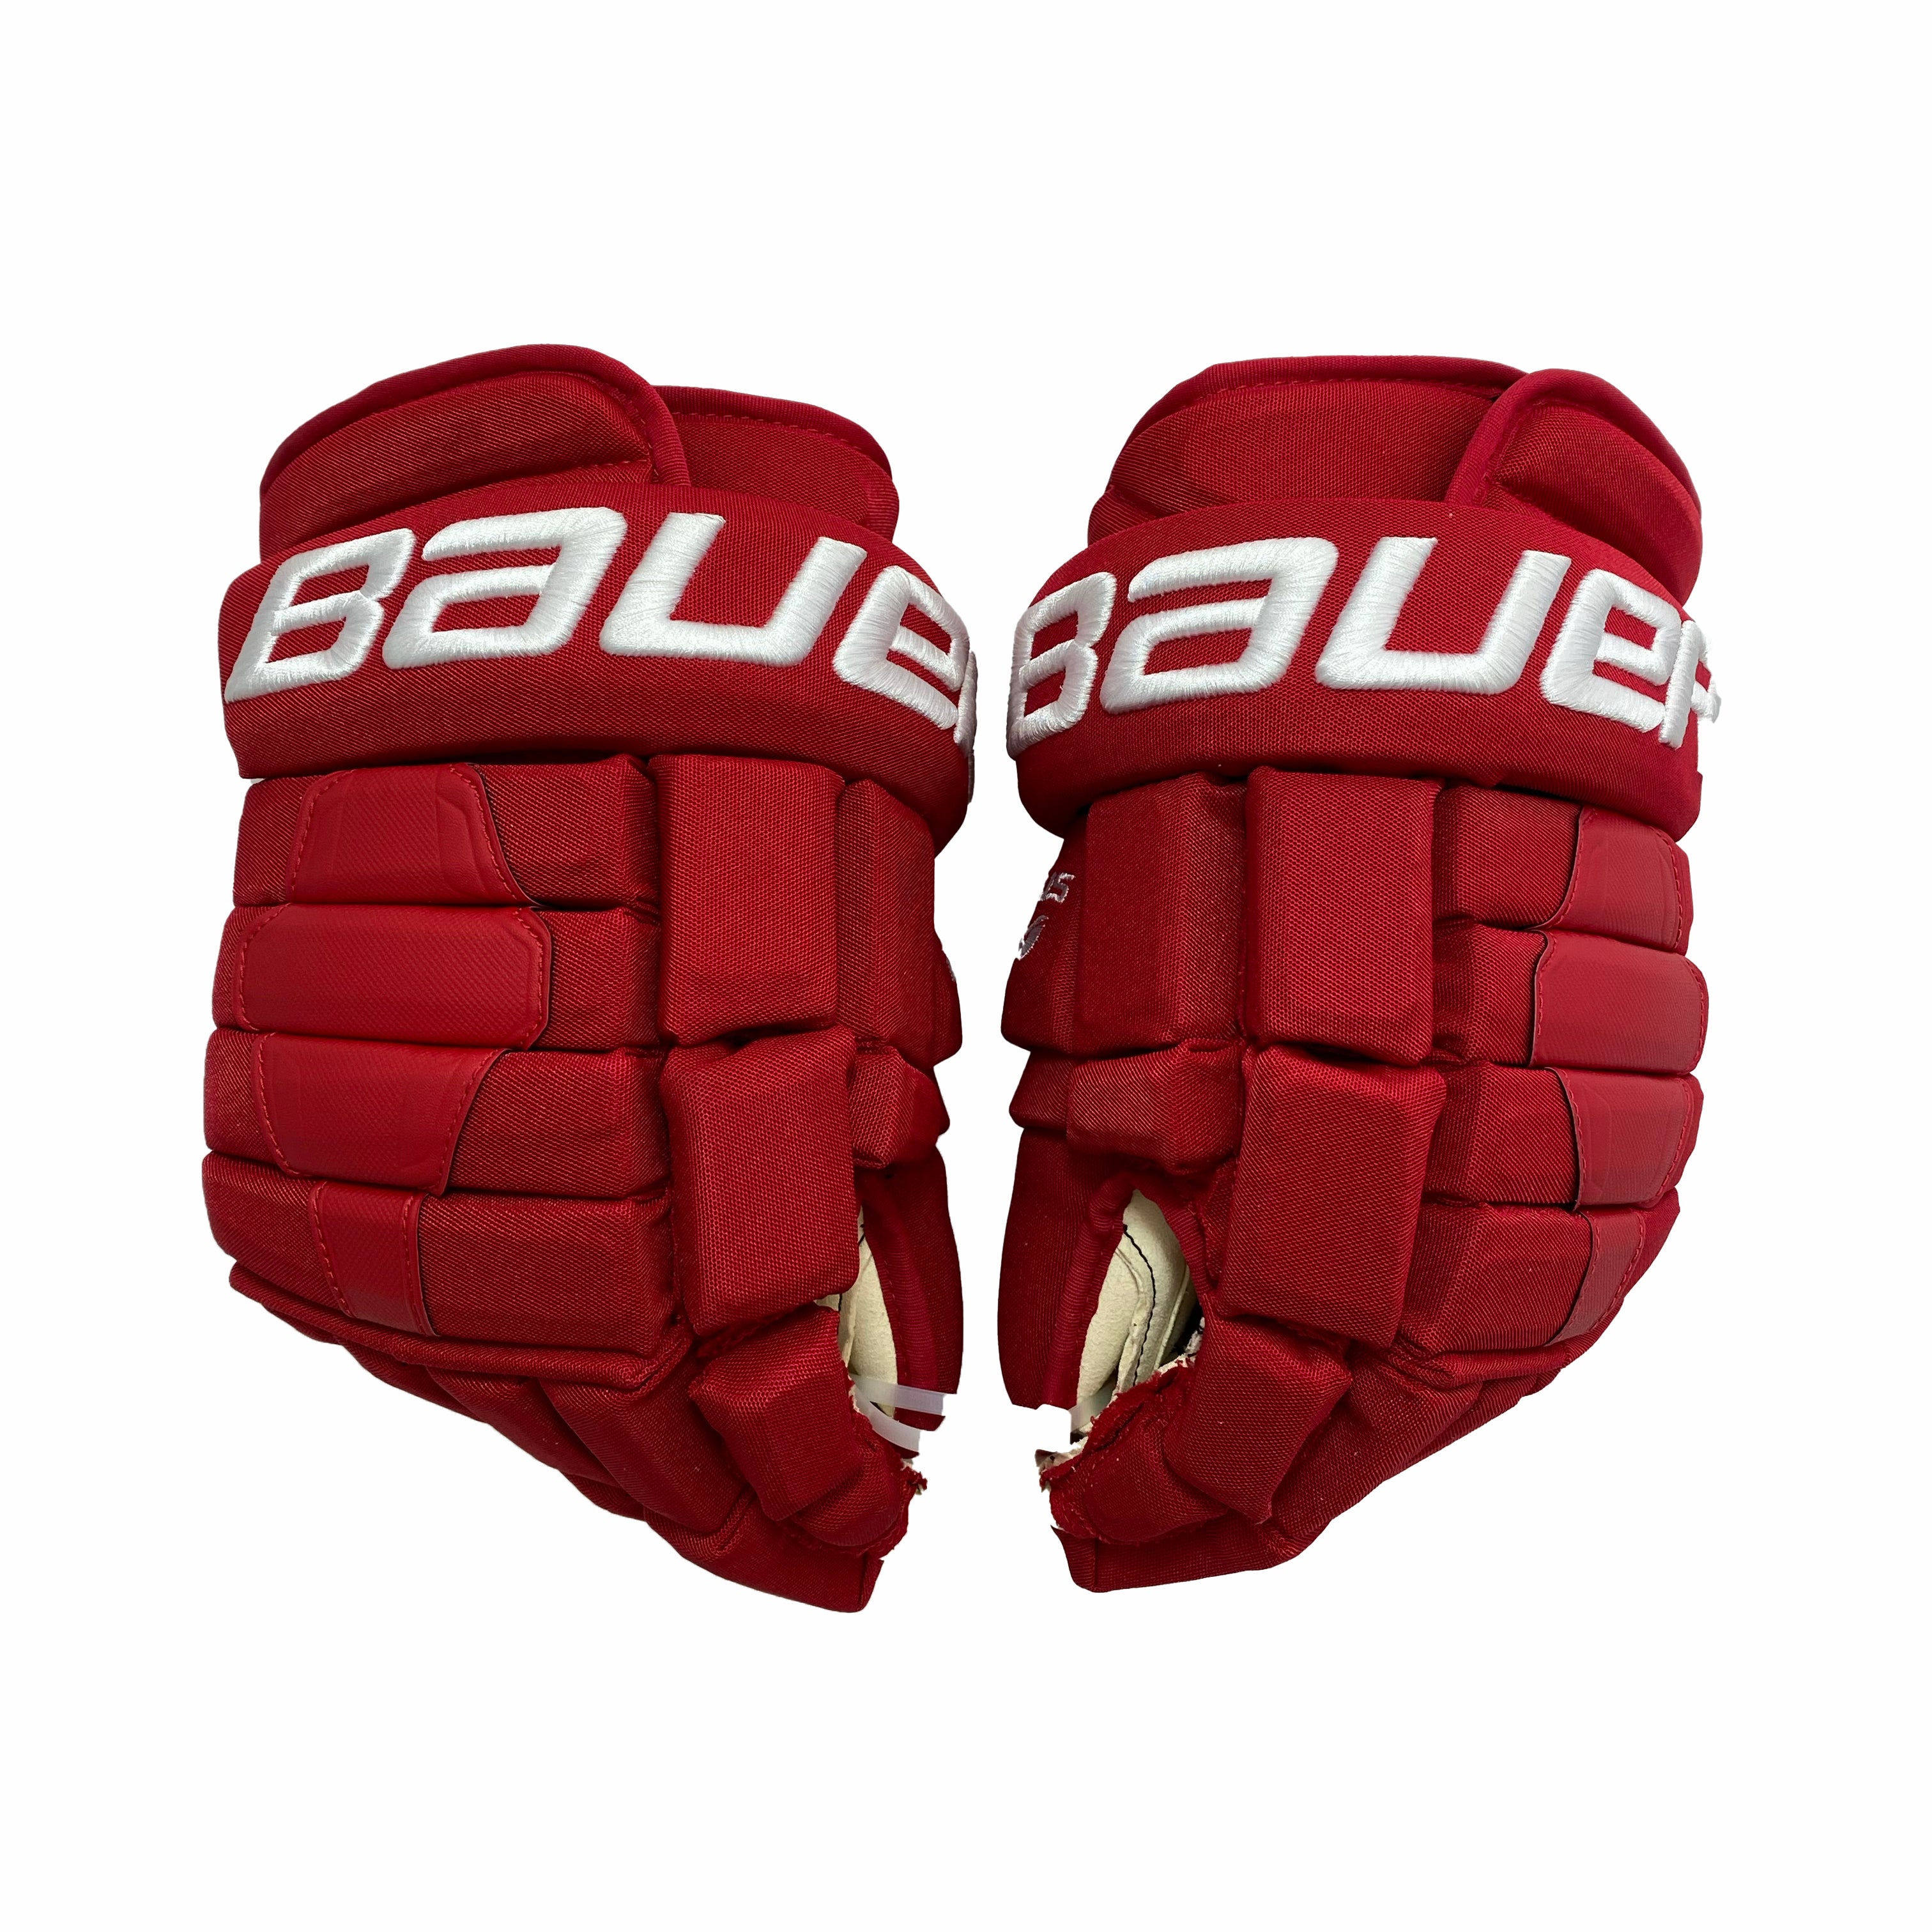 Detroit Red Wings NHL mini gloves